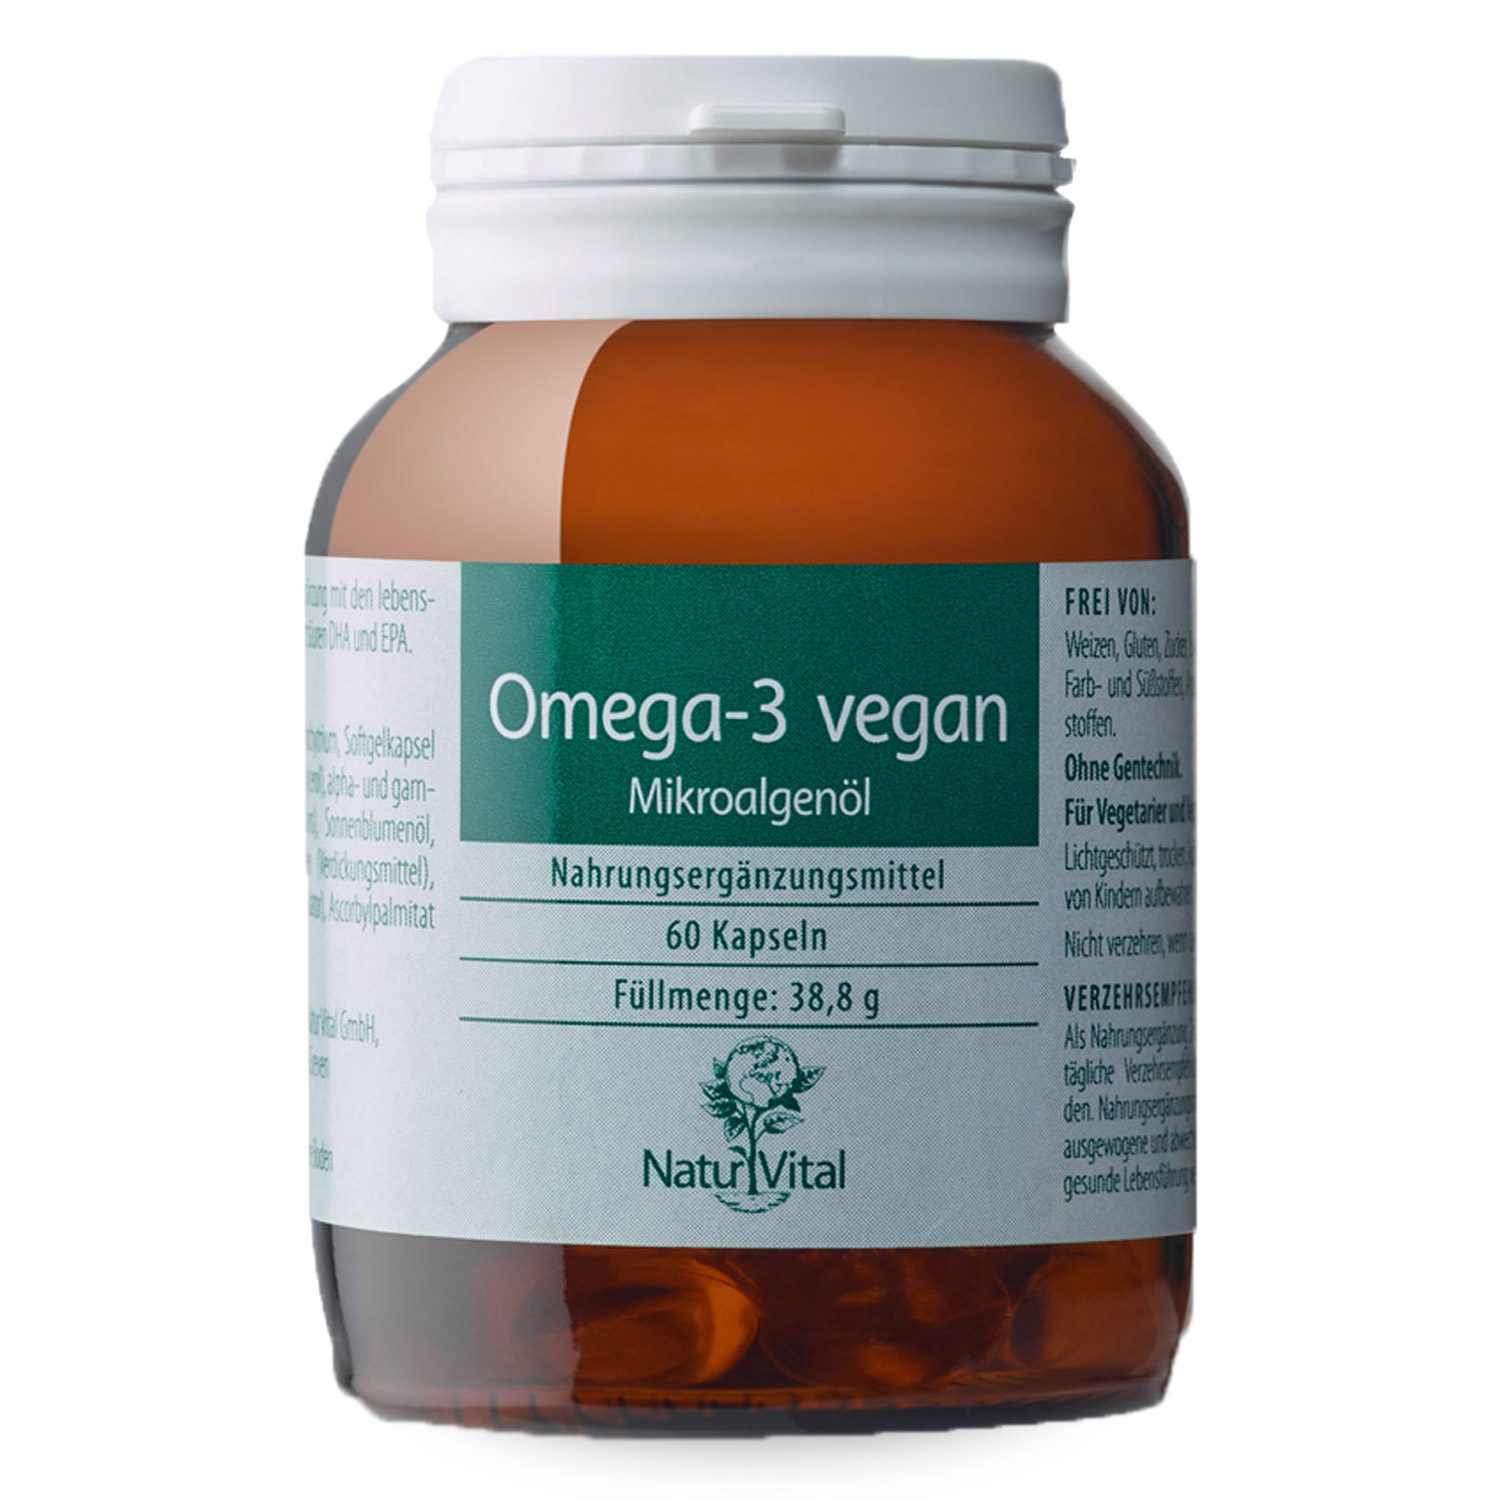 Omega 3 Vegan von Natur Vital - 60 Kapseln